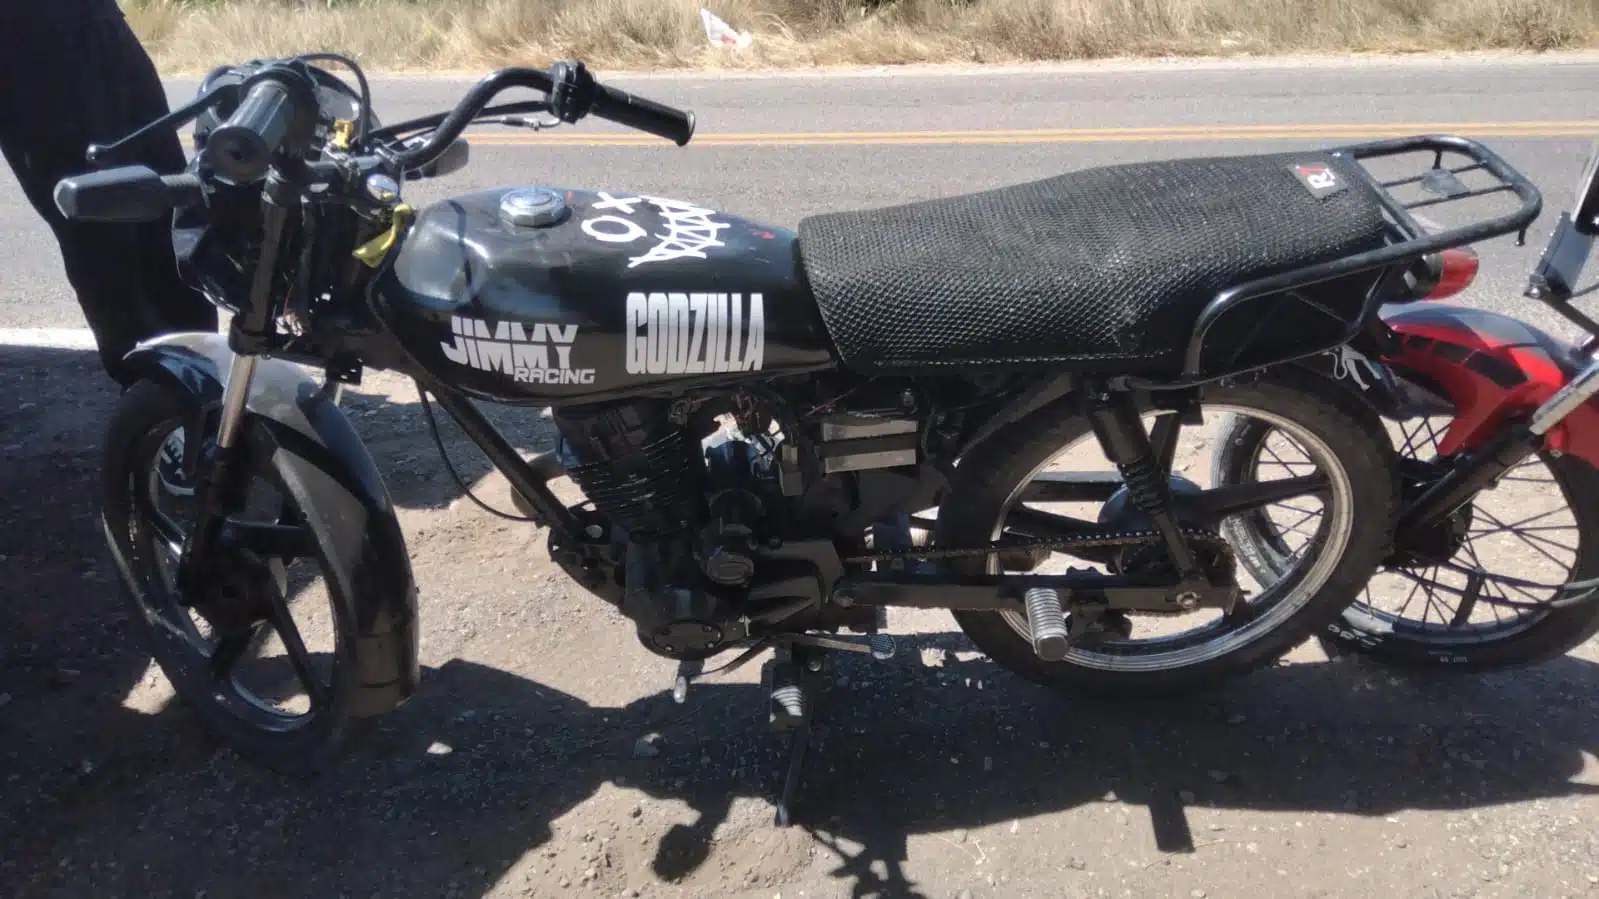 Motocicleta decomisada en Angostura